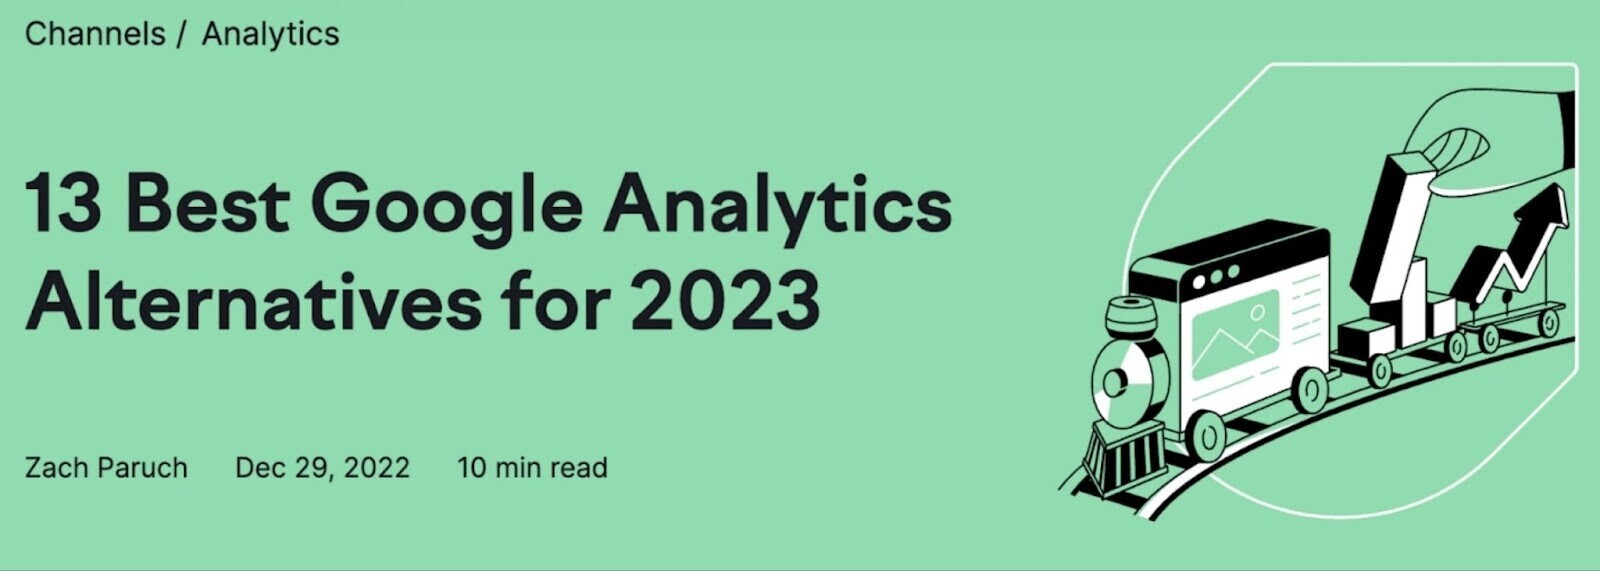 "13 Best Google Analytics Alternatives for 2023" blog title